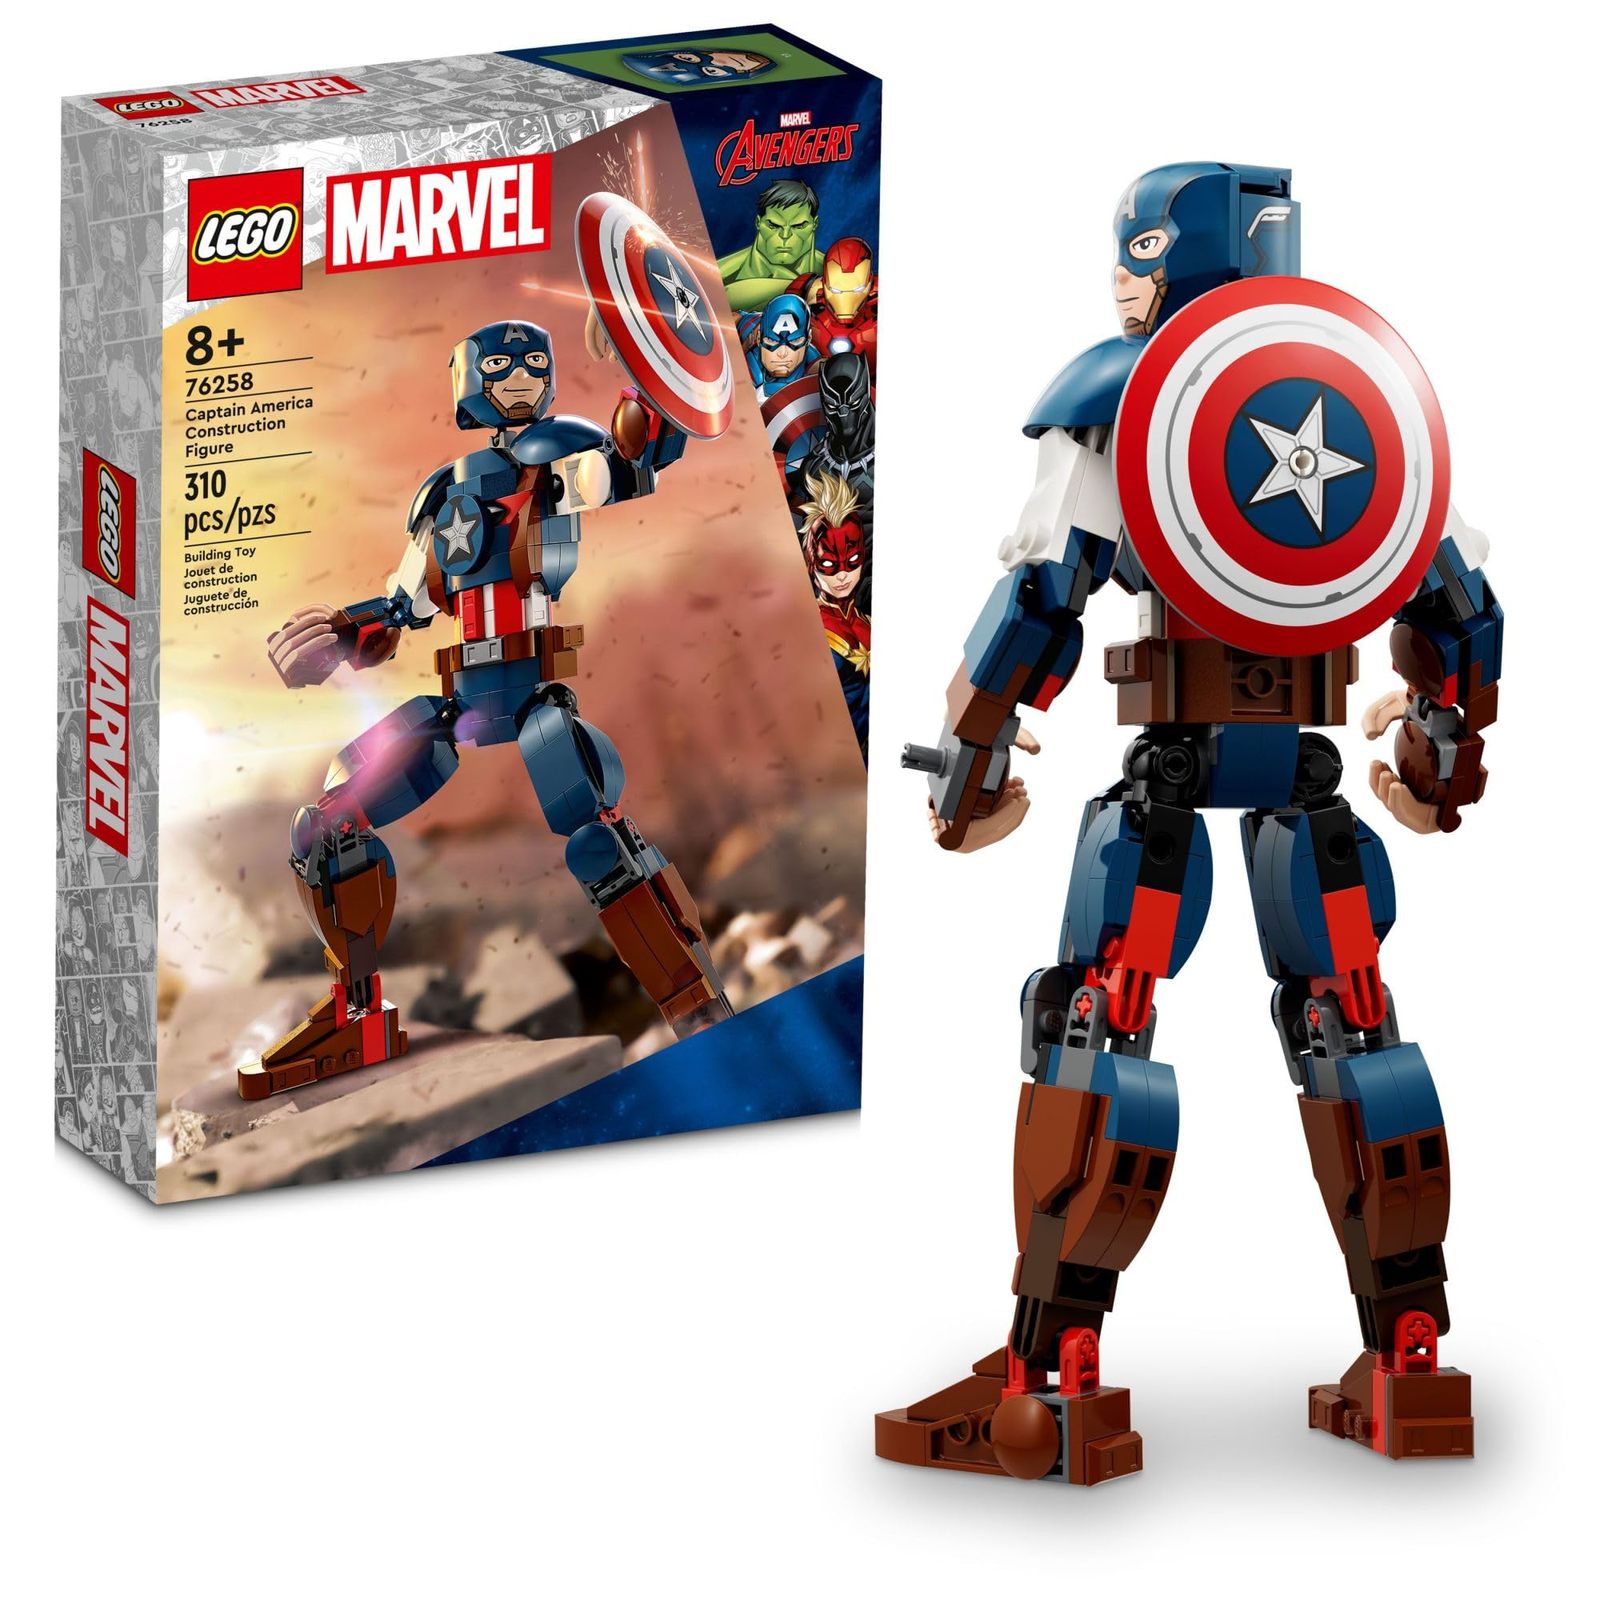 LEGO Marvel Captain America Construction Figure 76258 Buildable Marvel Action Fi - $33.99